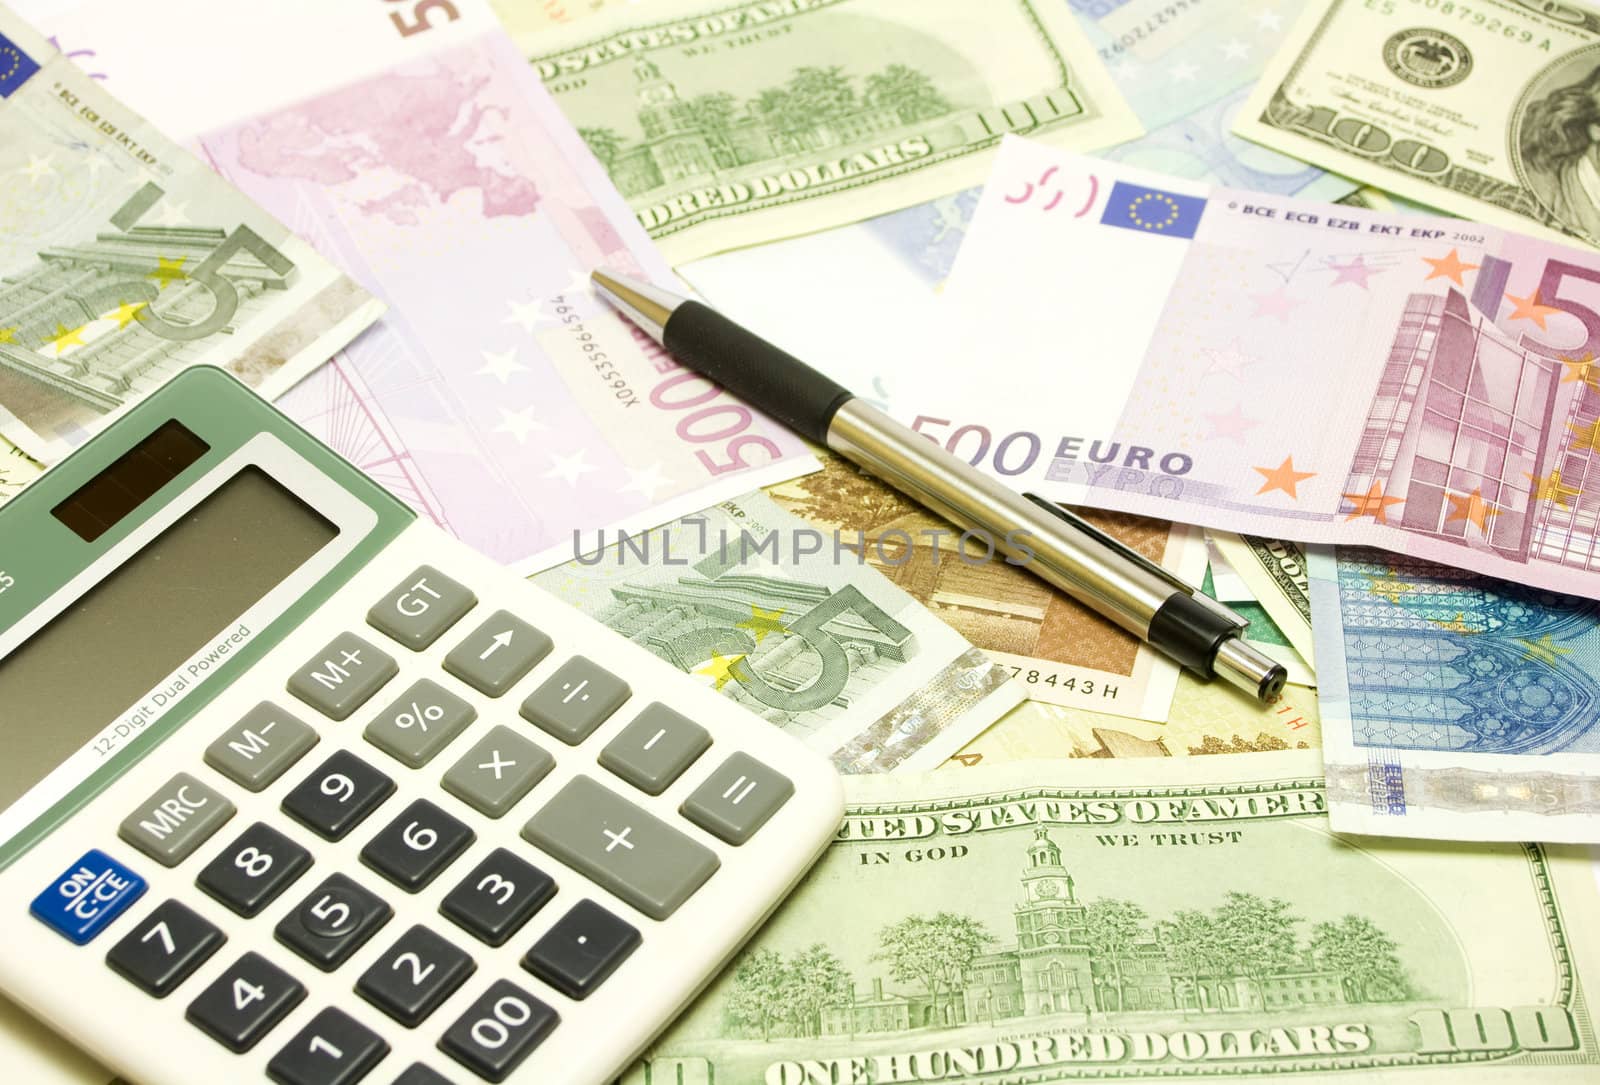 Dollar, euro, lat banknotes, calculator, pen by ursolv